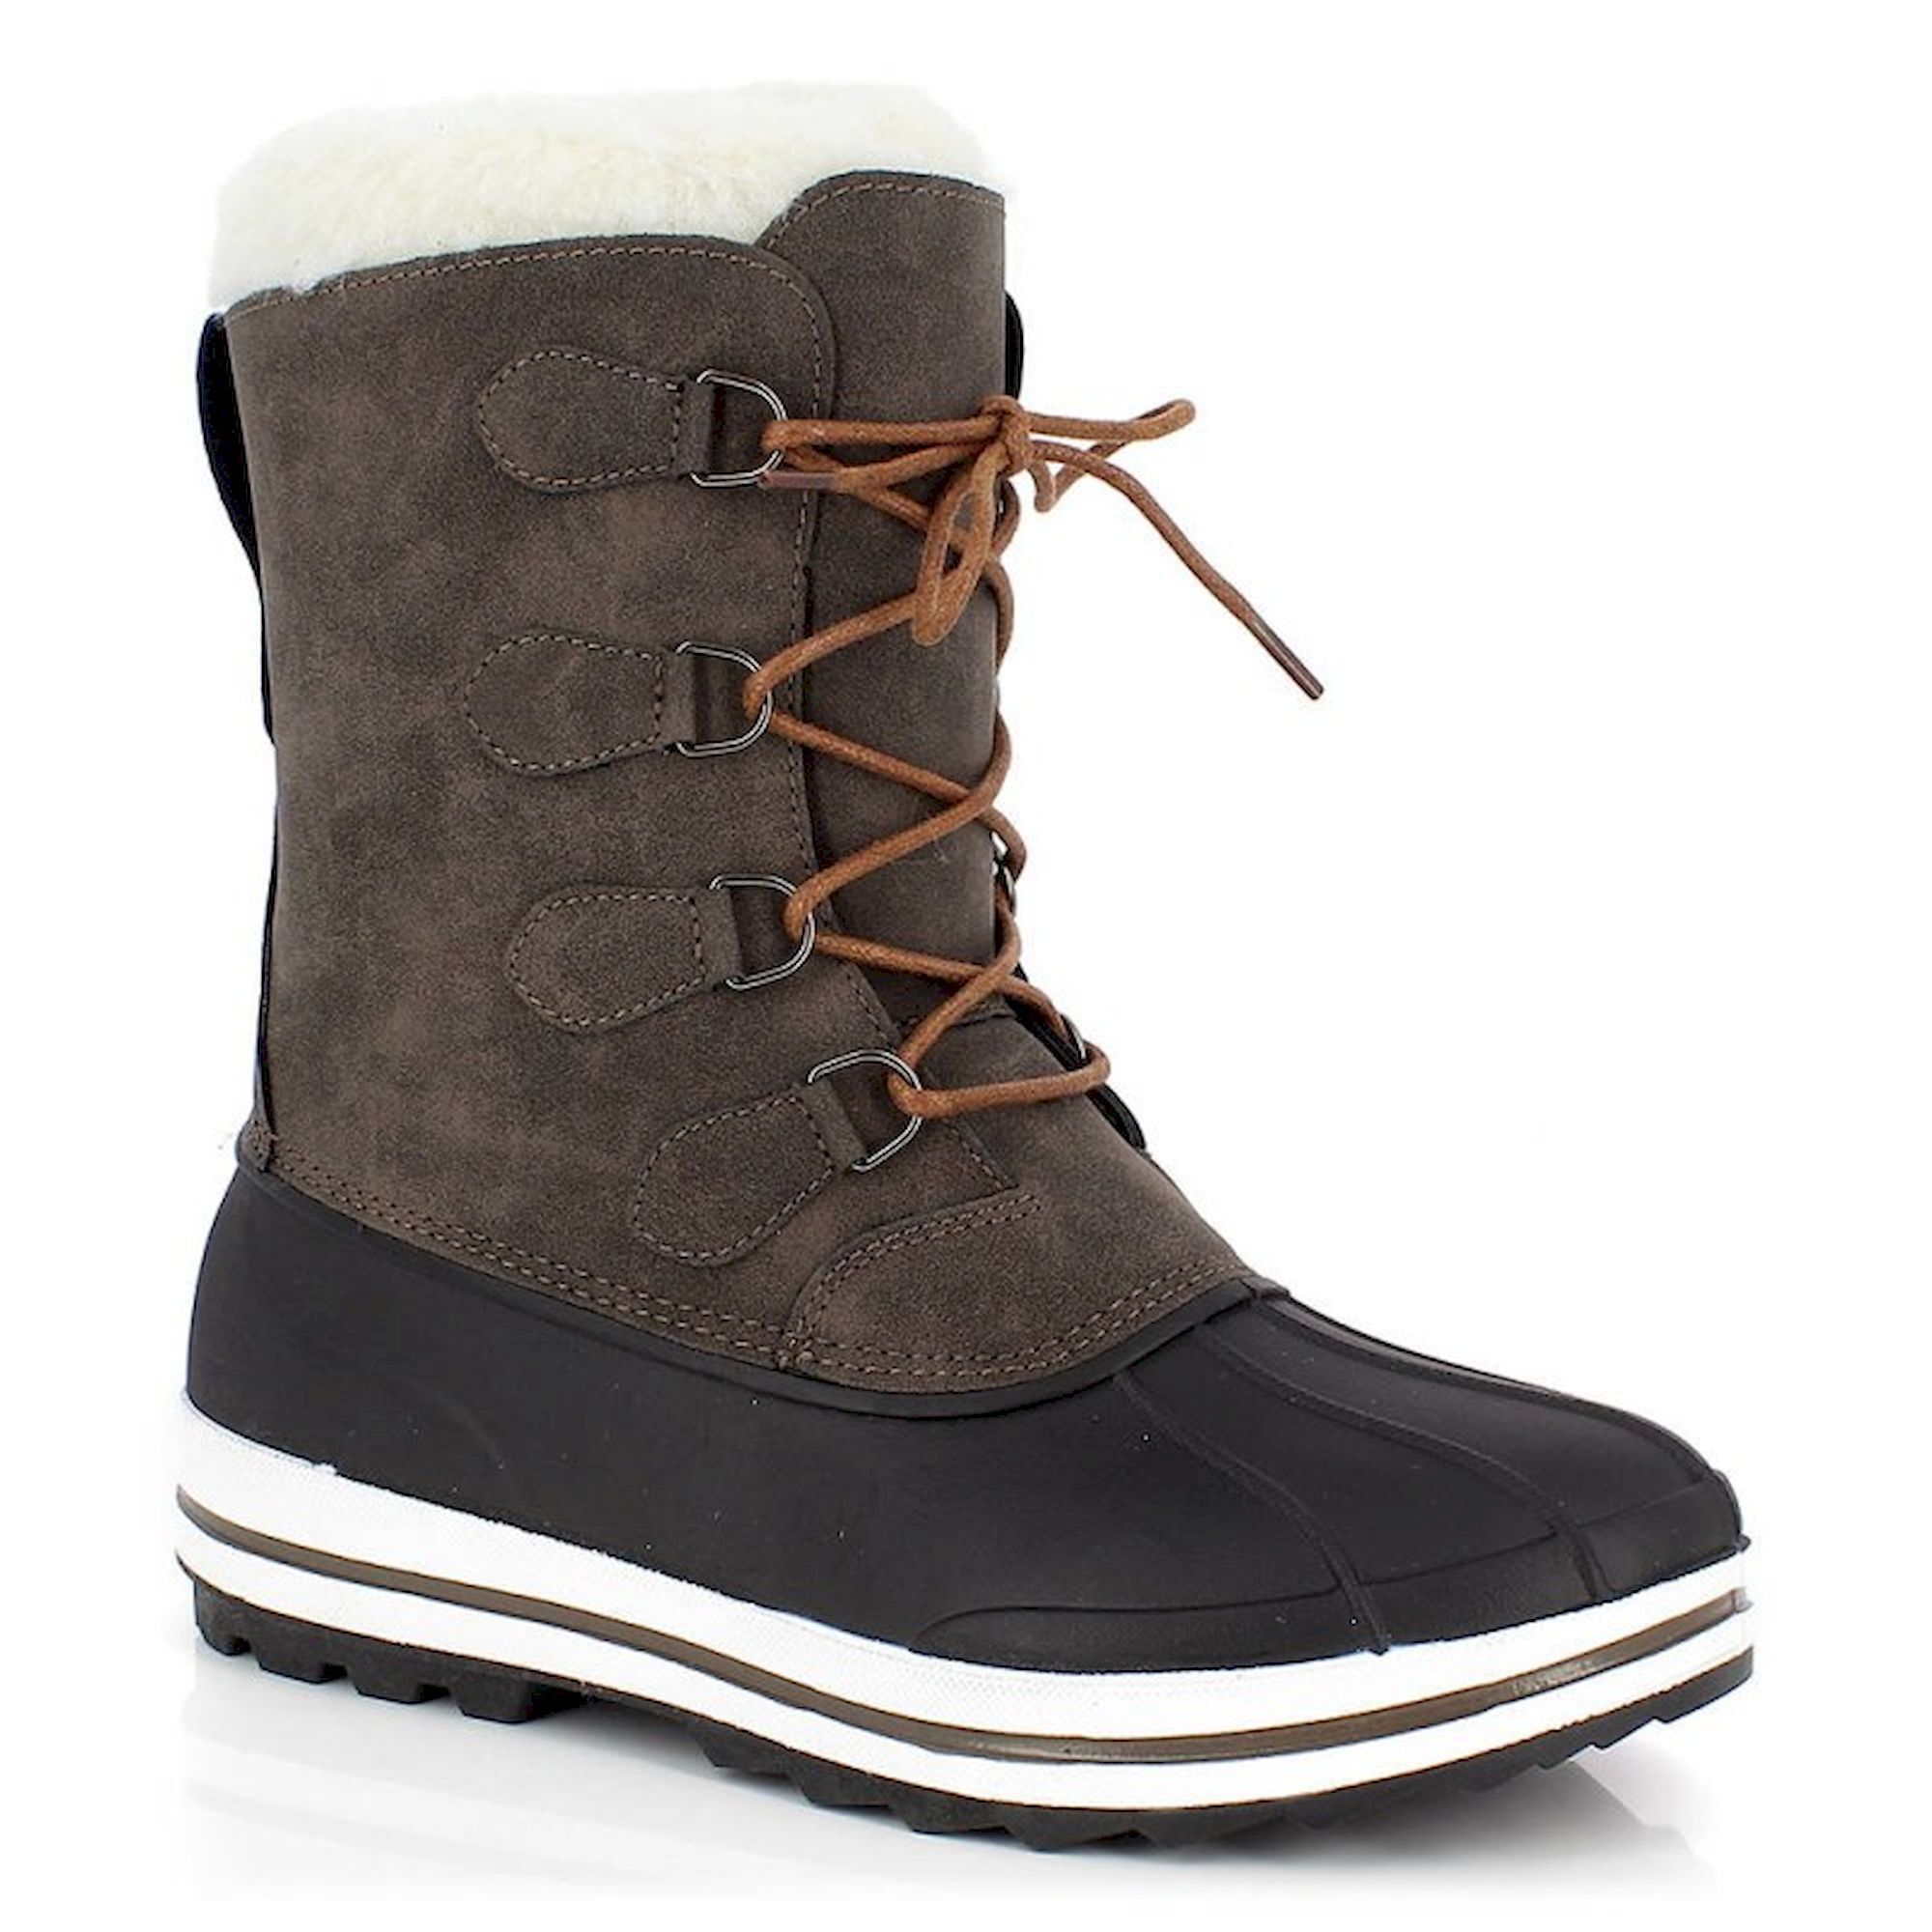 Kimberfeel Beker - Snow boots - Men's